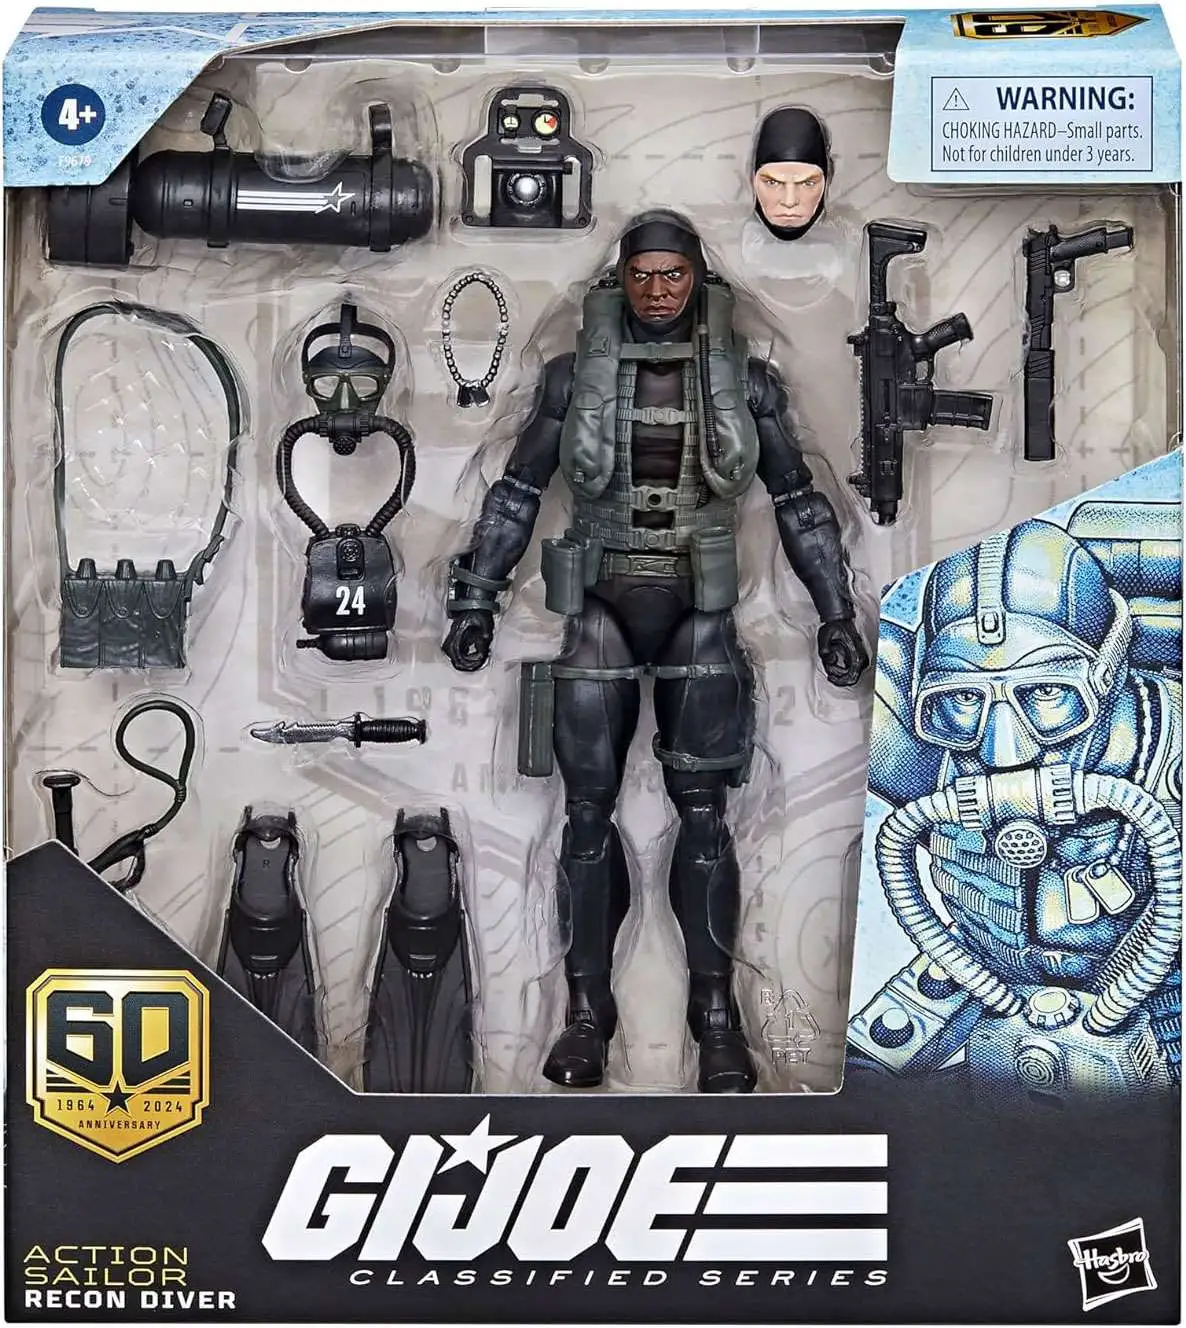 Hasbro G.I. Joe Classified Series Storm Shadow 6-inch – Broke Robot Toys